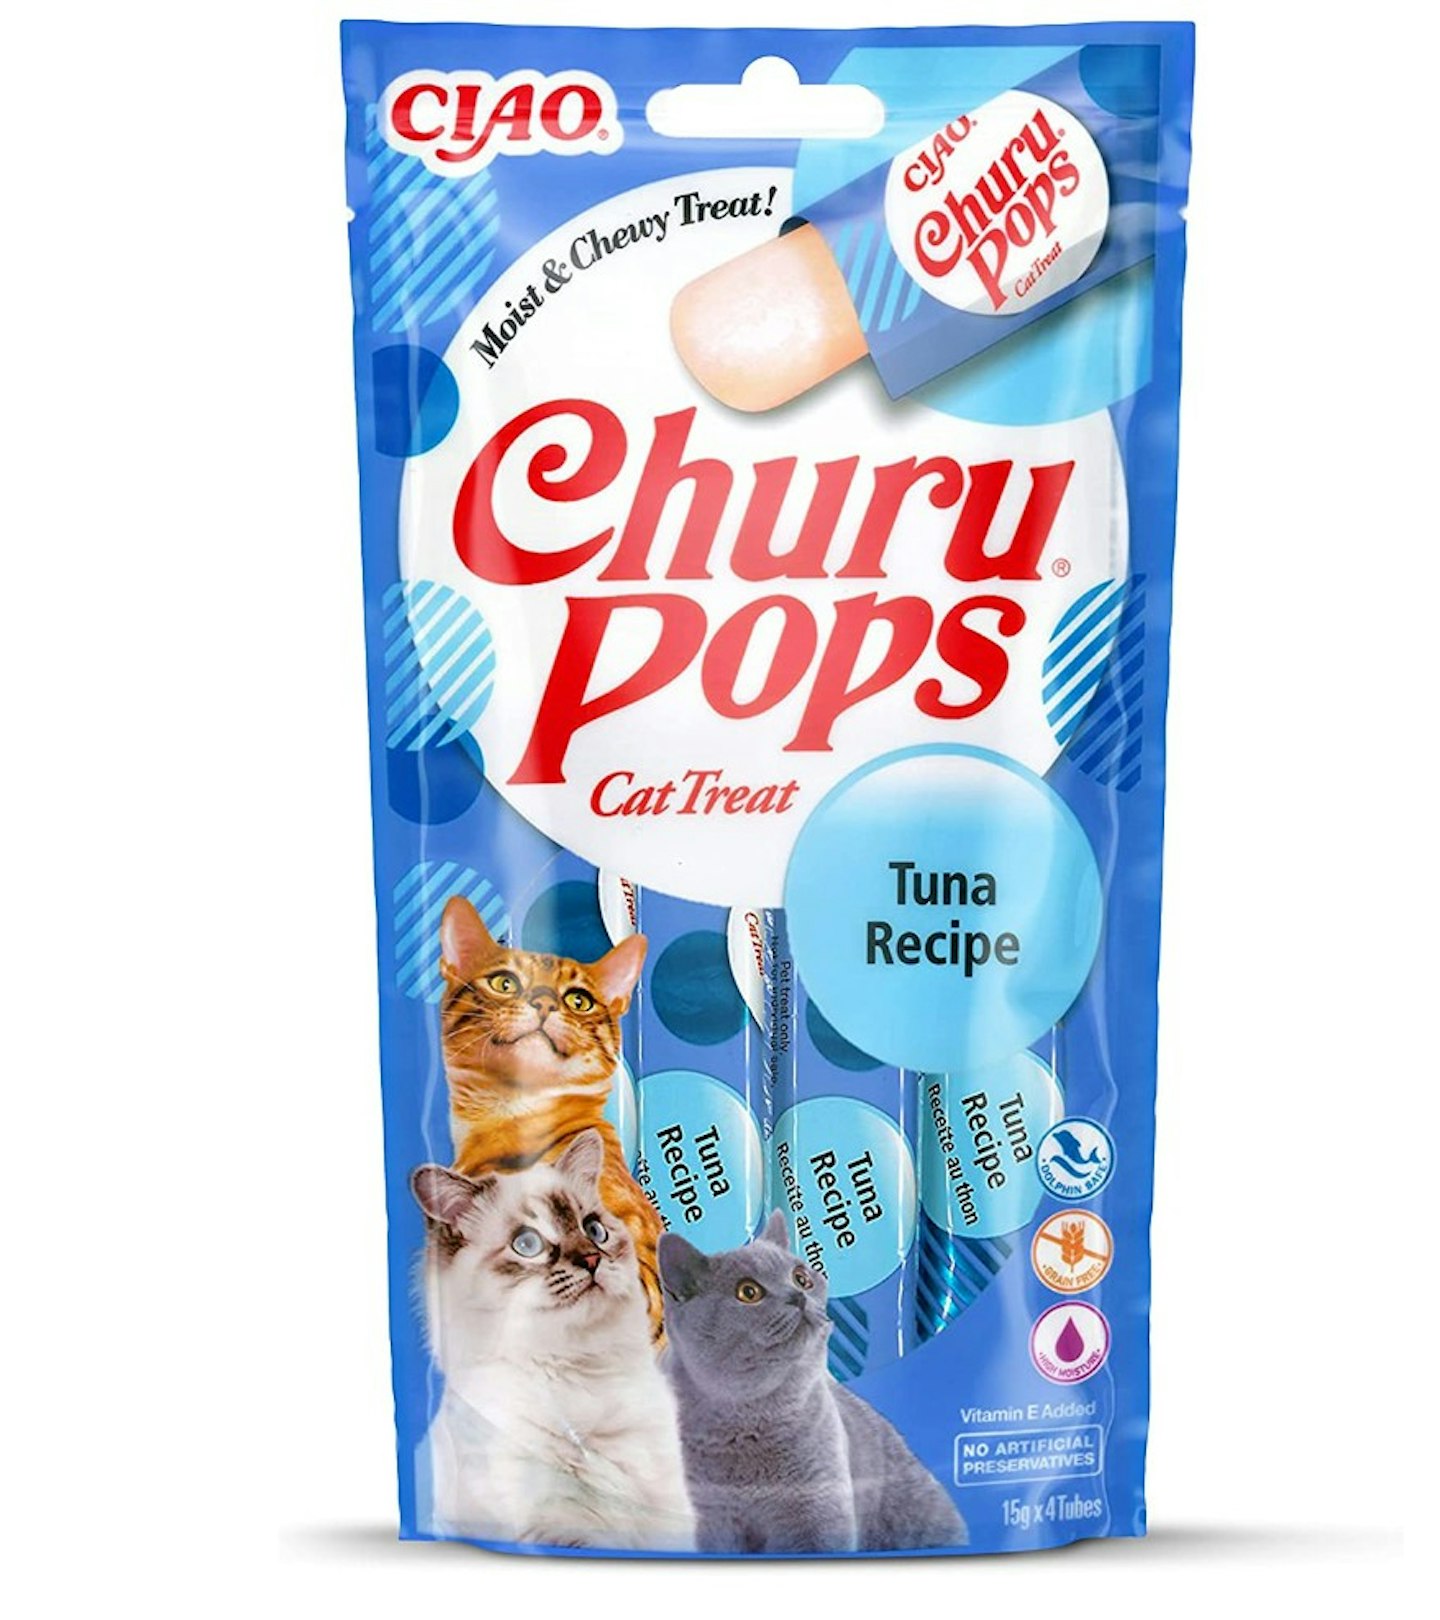  Ciao Churu Pops by INABA Cat Treat - Tuna Flavour 